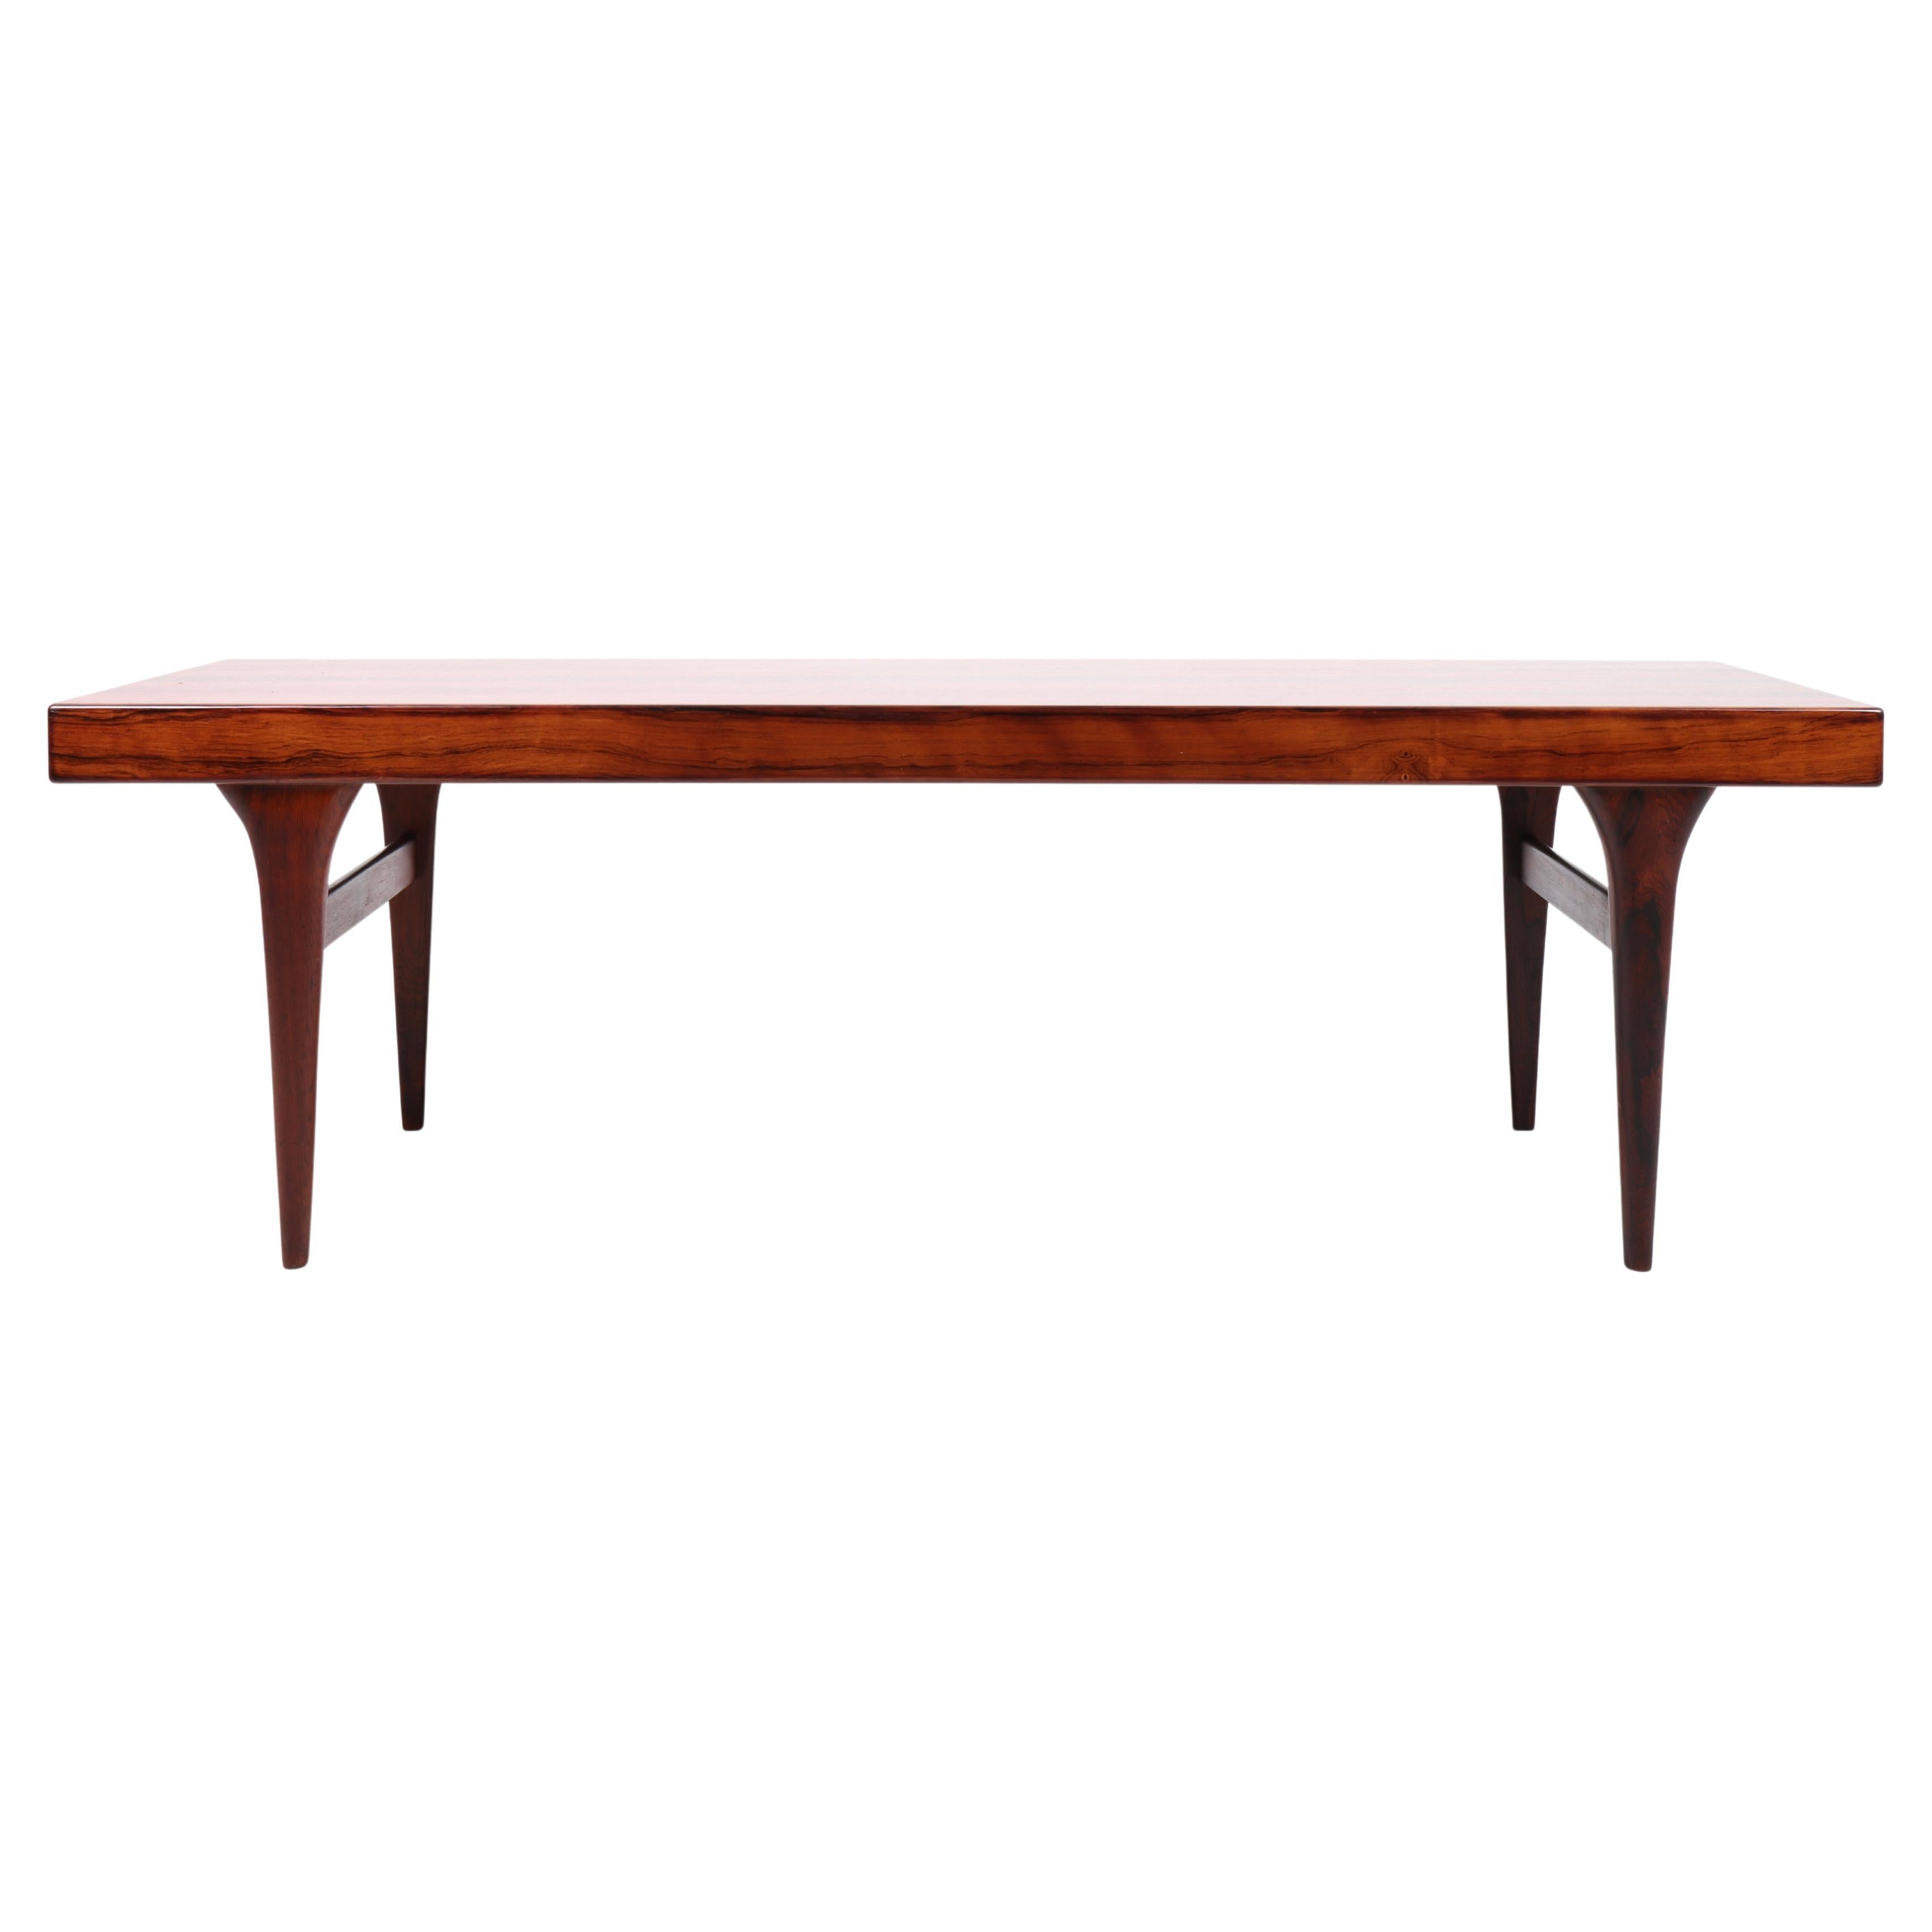 Midcentury Low Table in Rosewood, Designed by Johannes Andersen, Danish Design